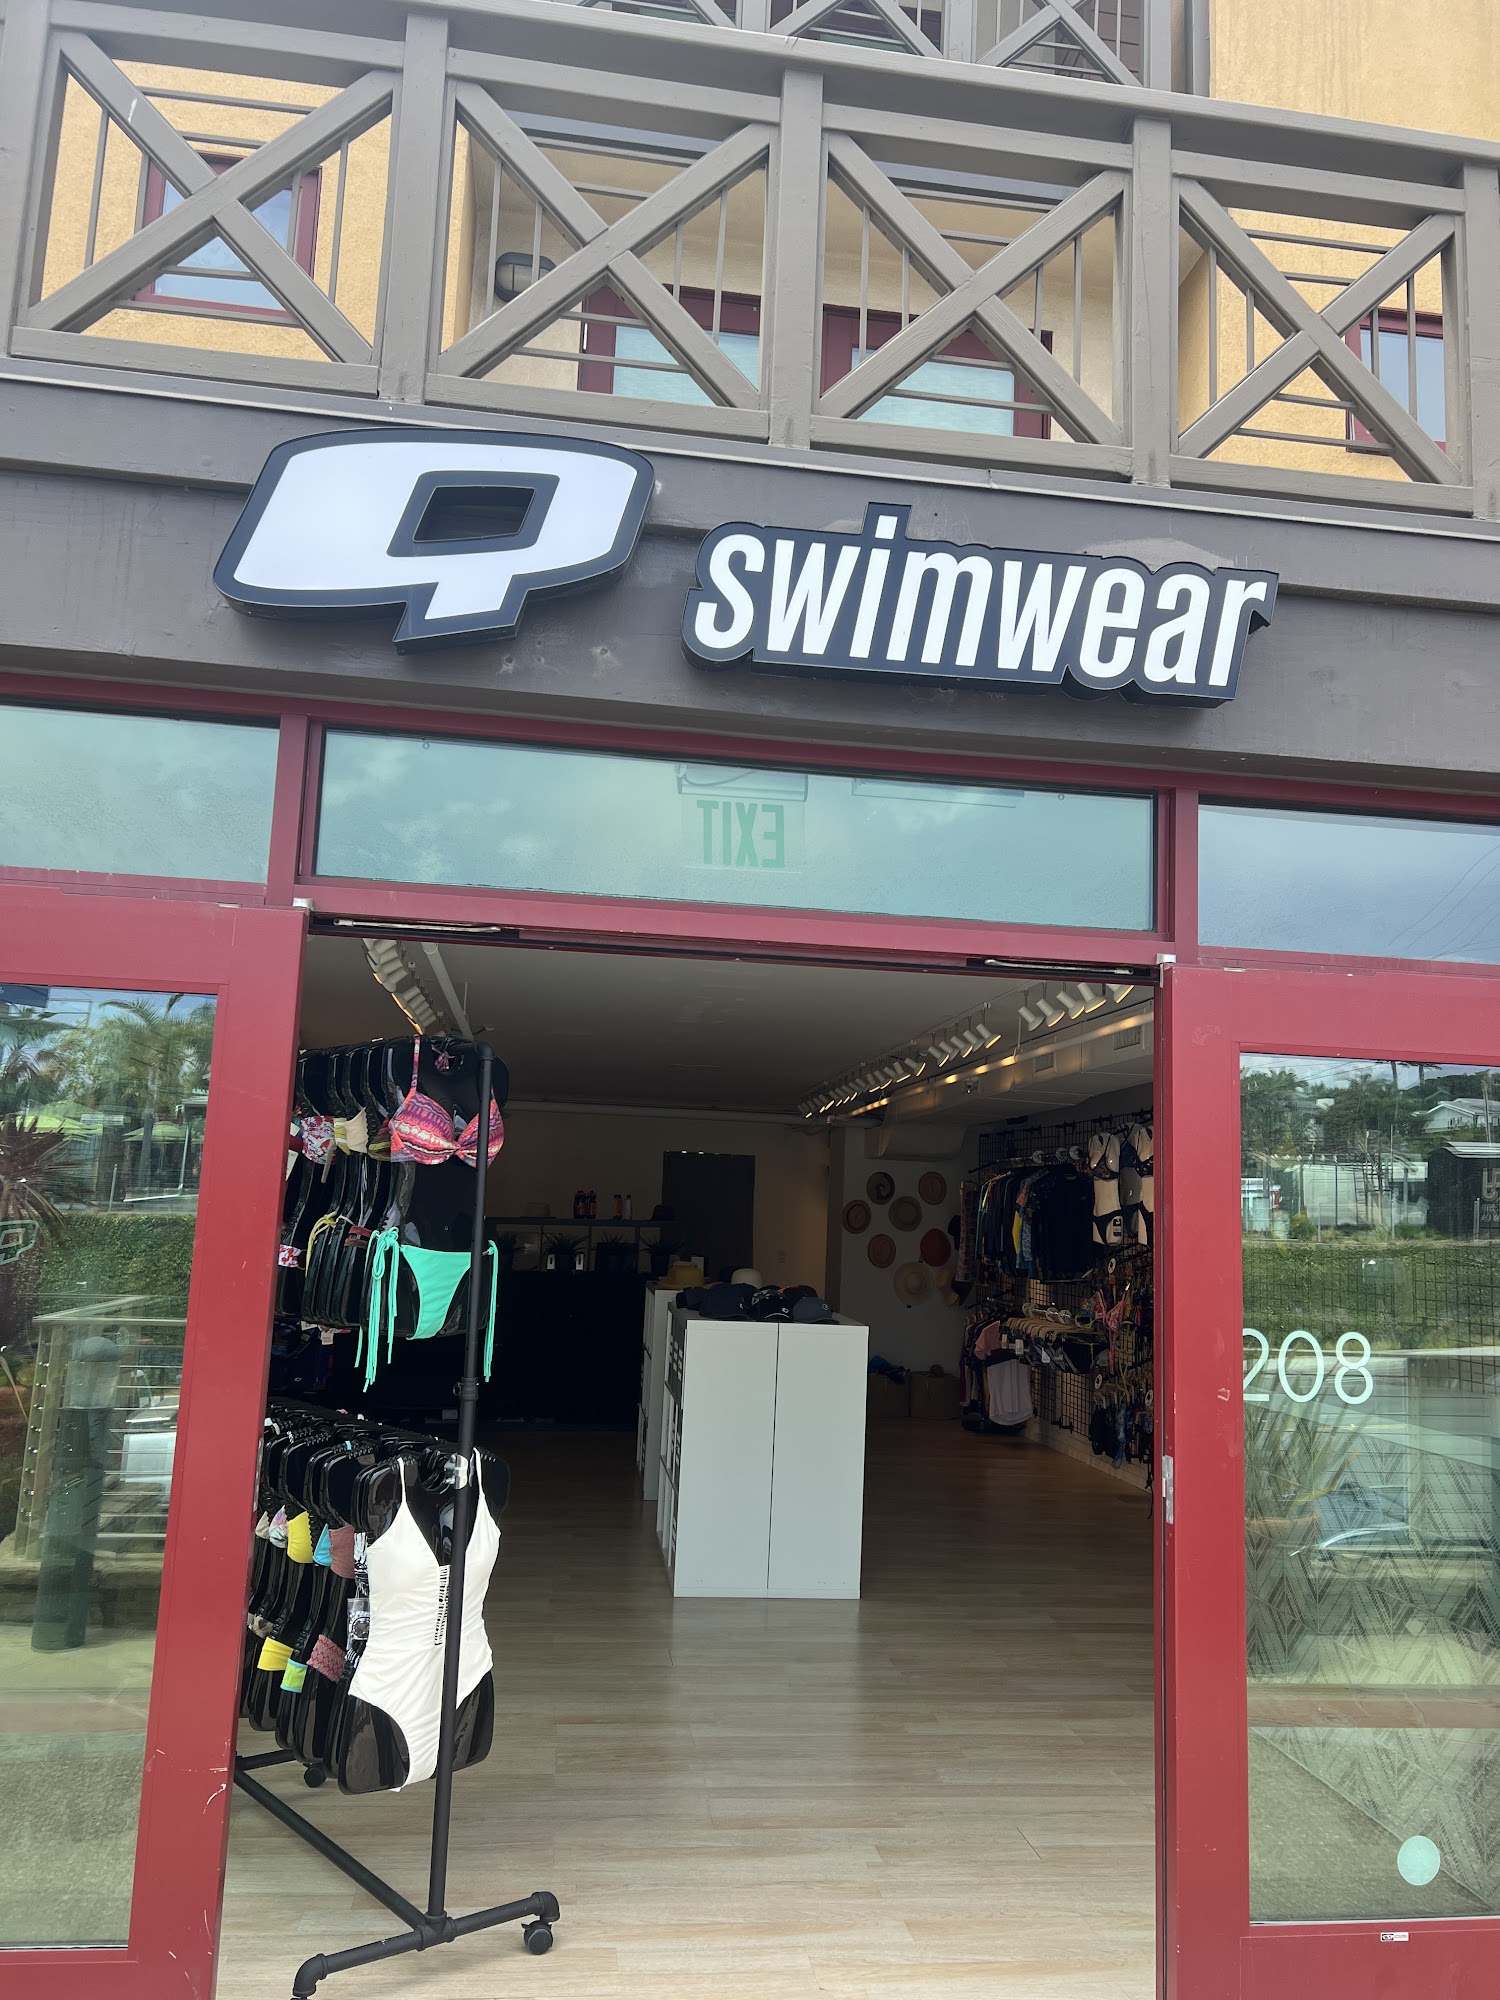 Q Swimwear